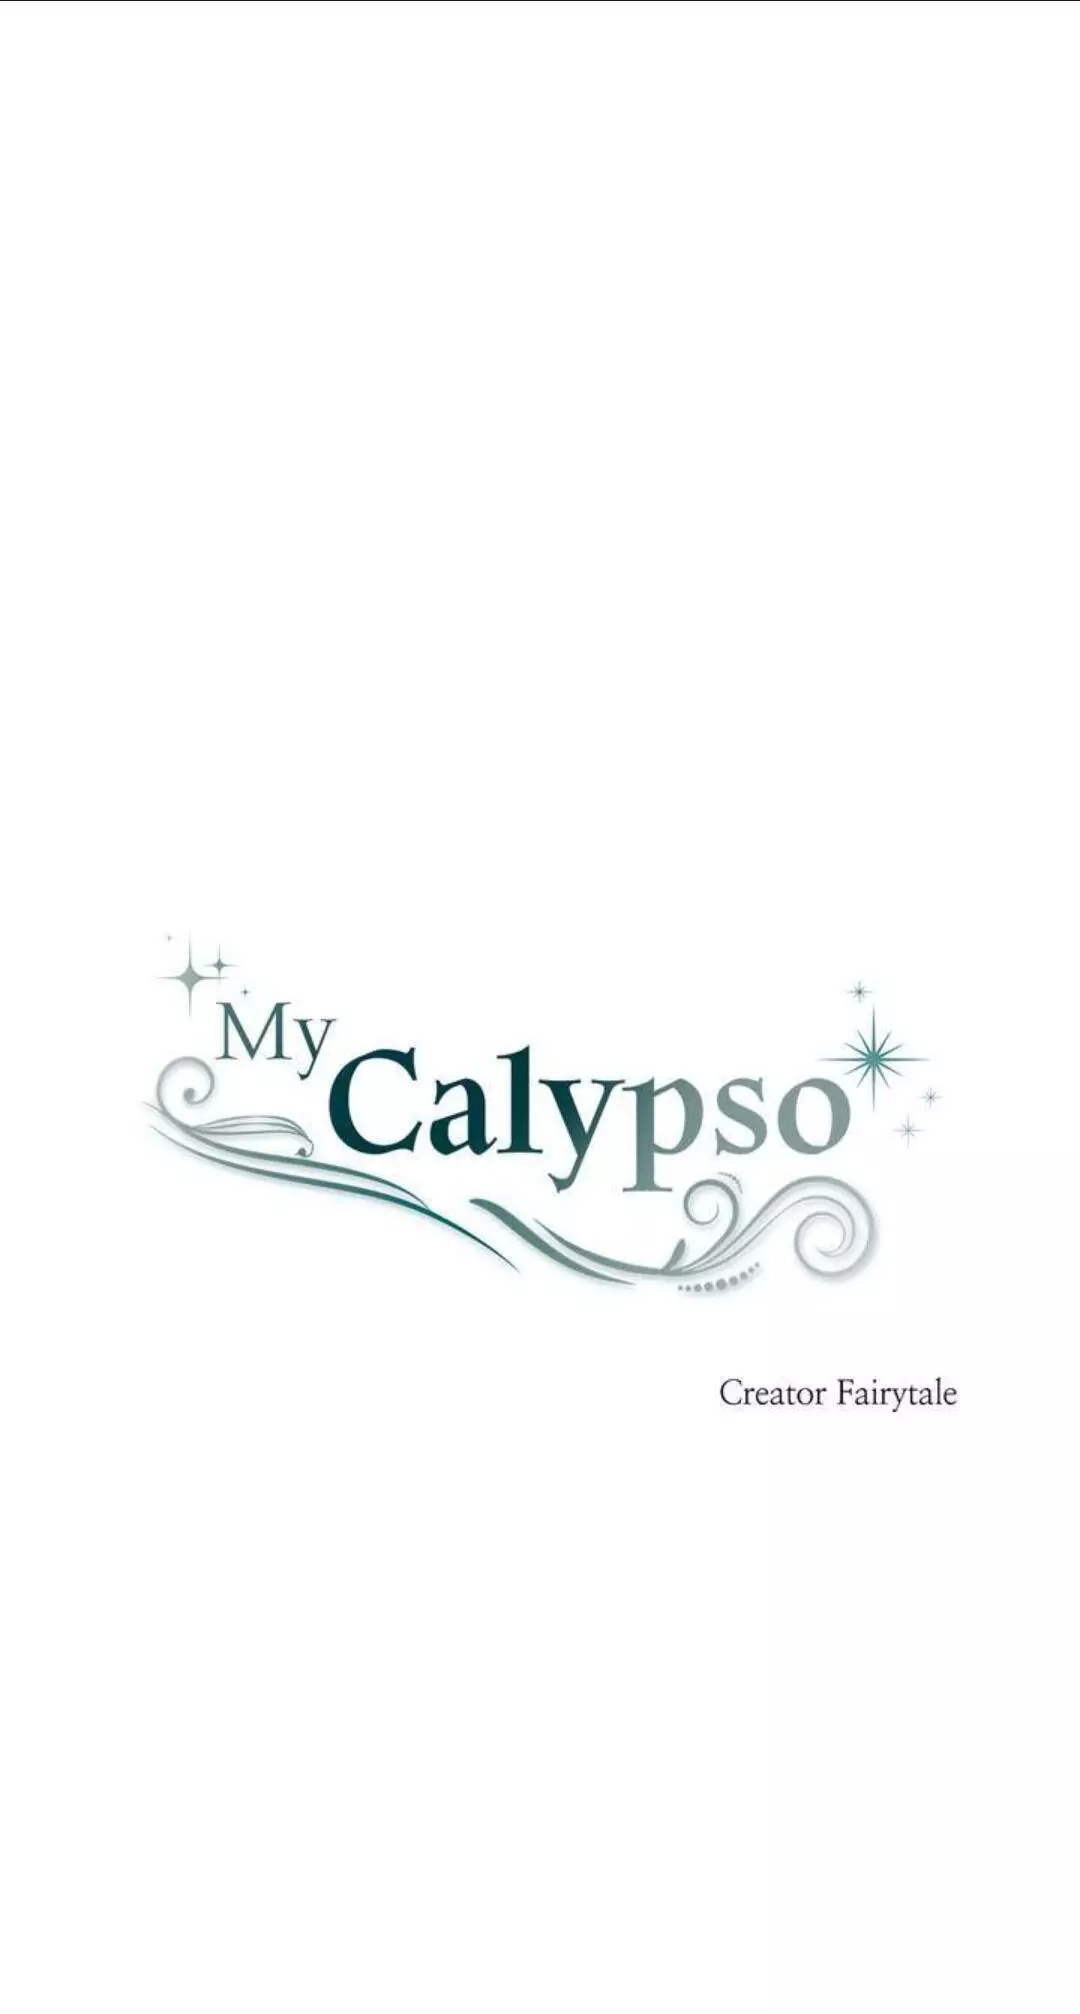 My Calypso - 3 page 1-c39476fd